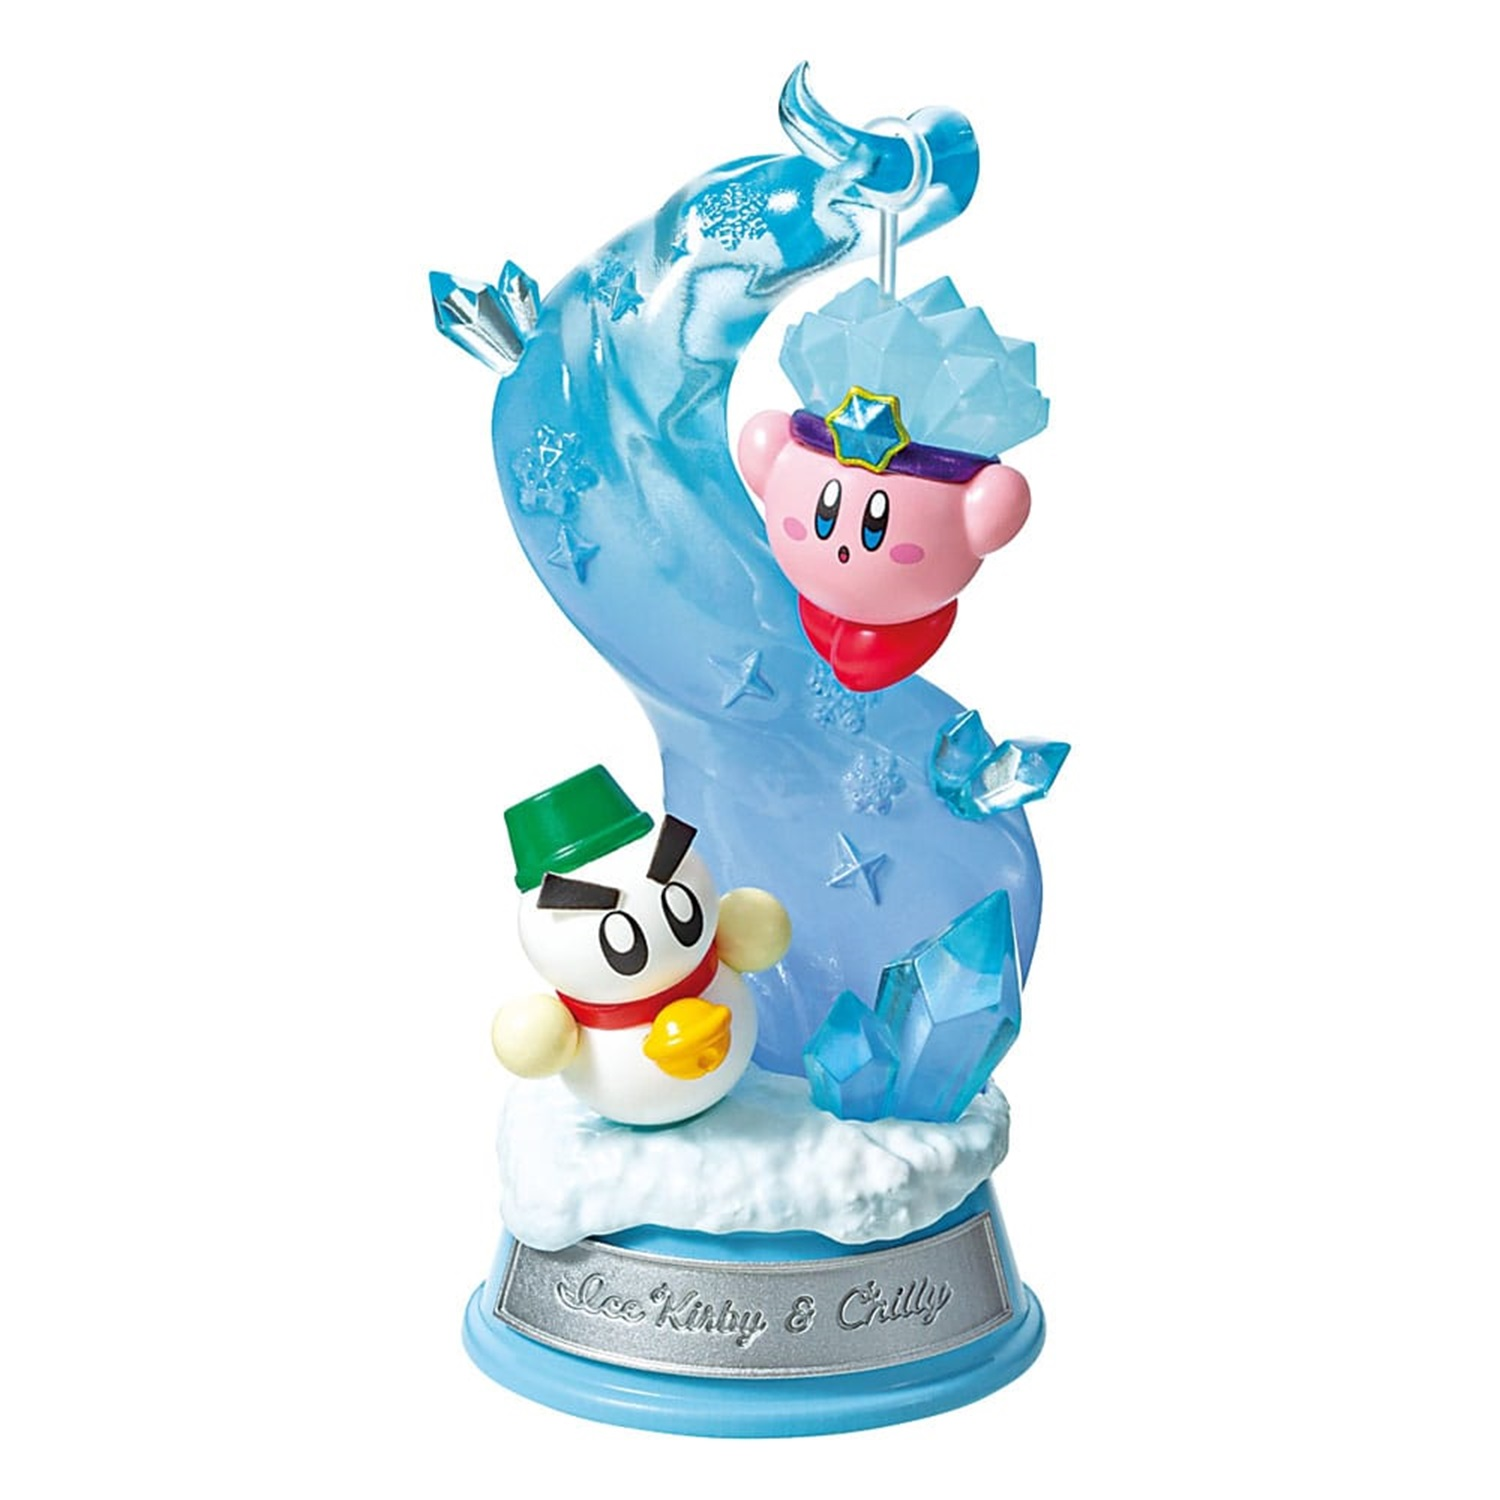 Display Dreamland Sammelfigur RE-MENT Kirby Swing cm 6 in 6 Kirby Minifiguren